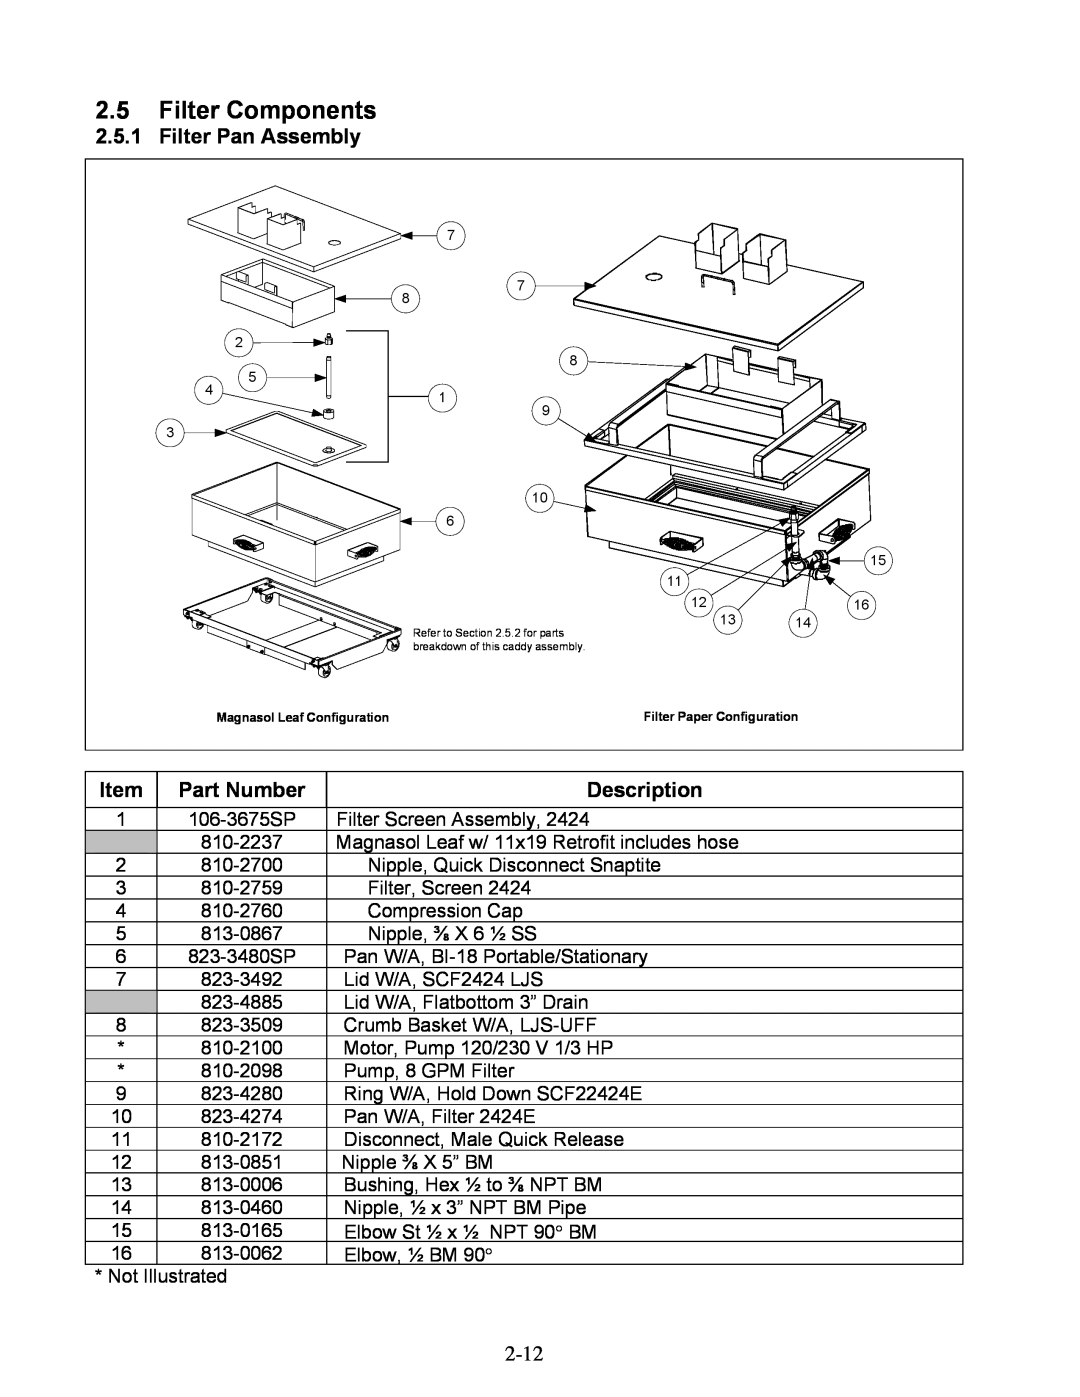 Frymaster 1824E manual 2.5Filter Components, Filter Pan Assembly, Part Number, Description 